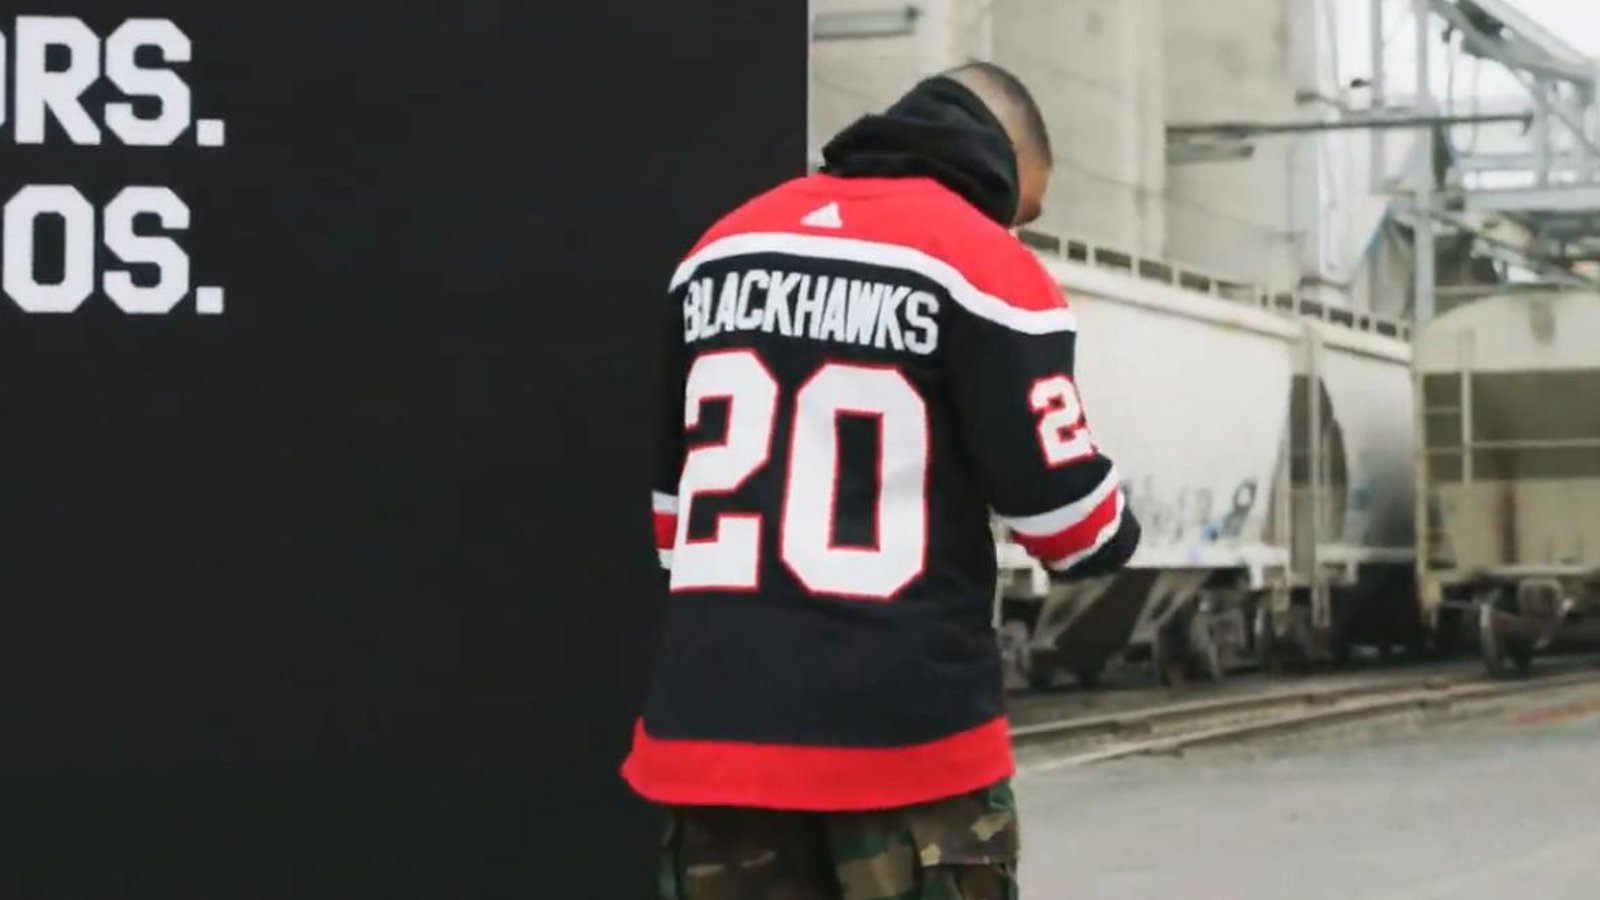 Rumor: The NHL is hiding the Blackhawks logo on the new Retro Reverse jersey.